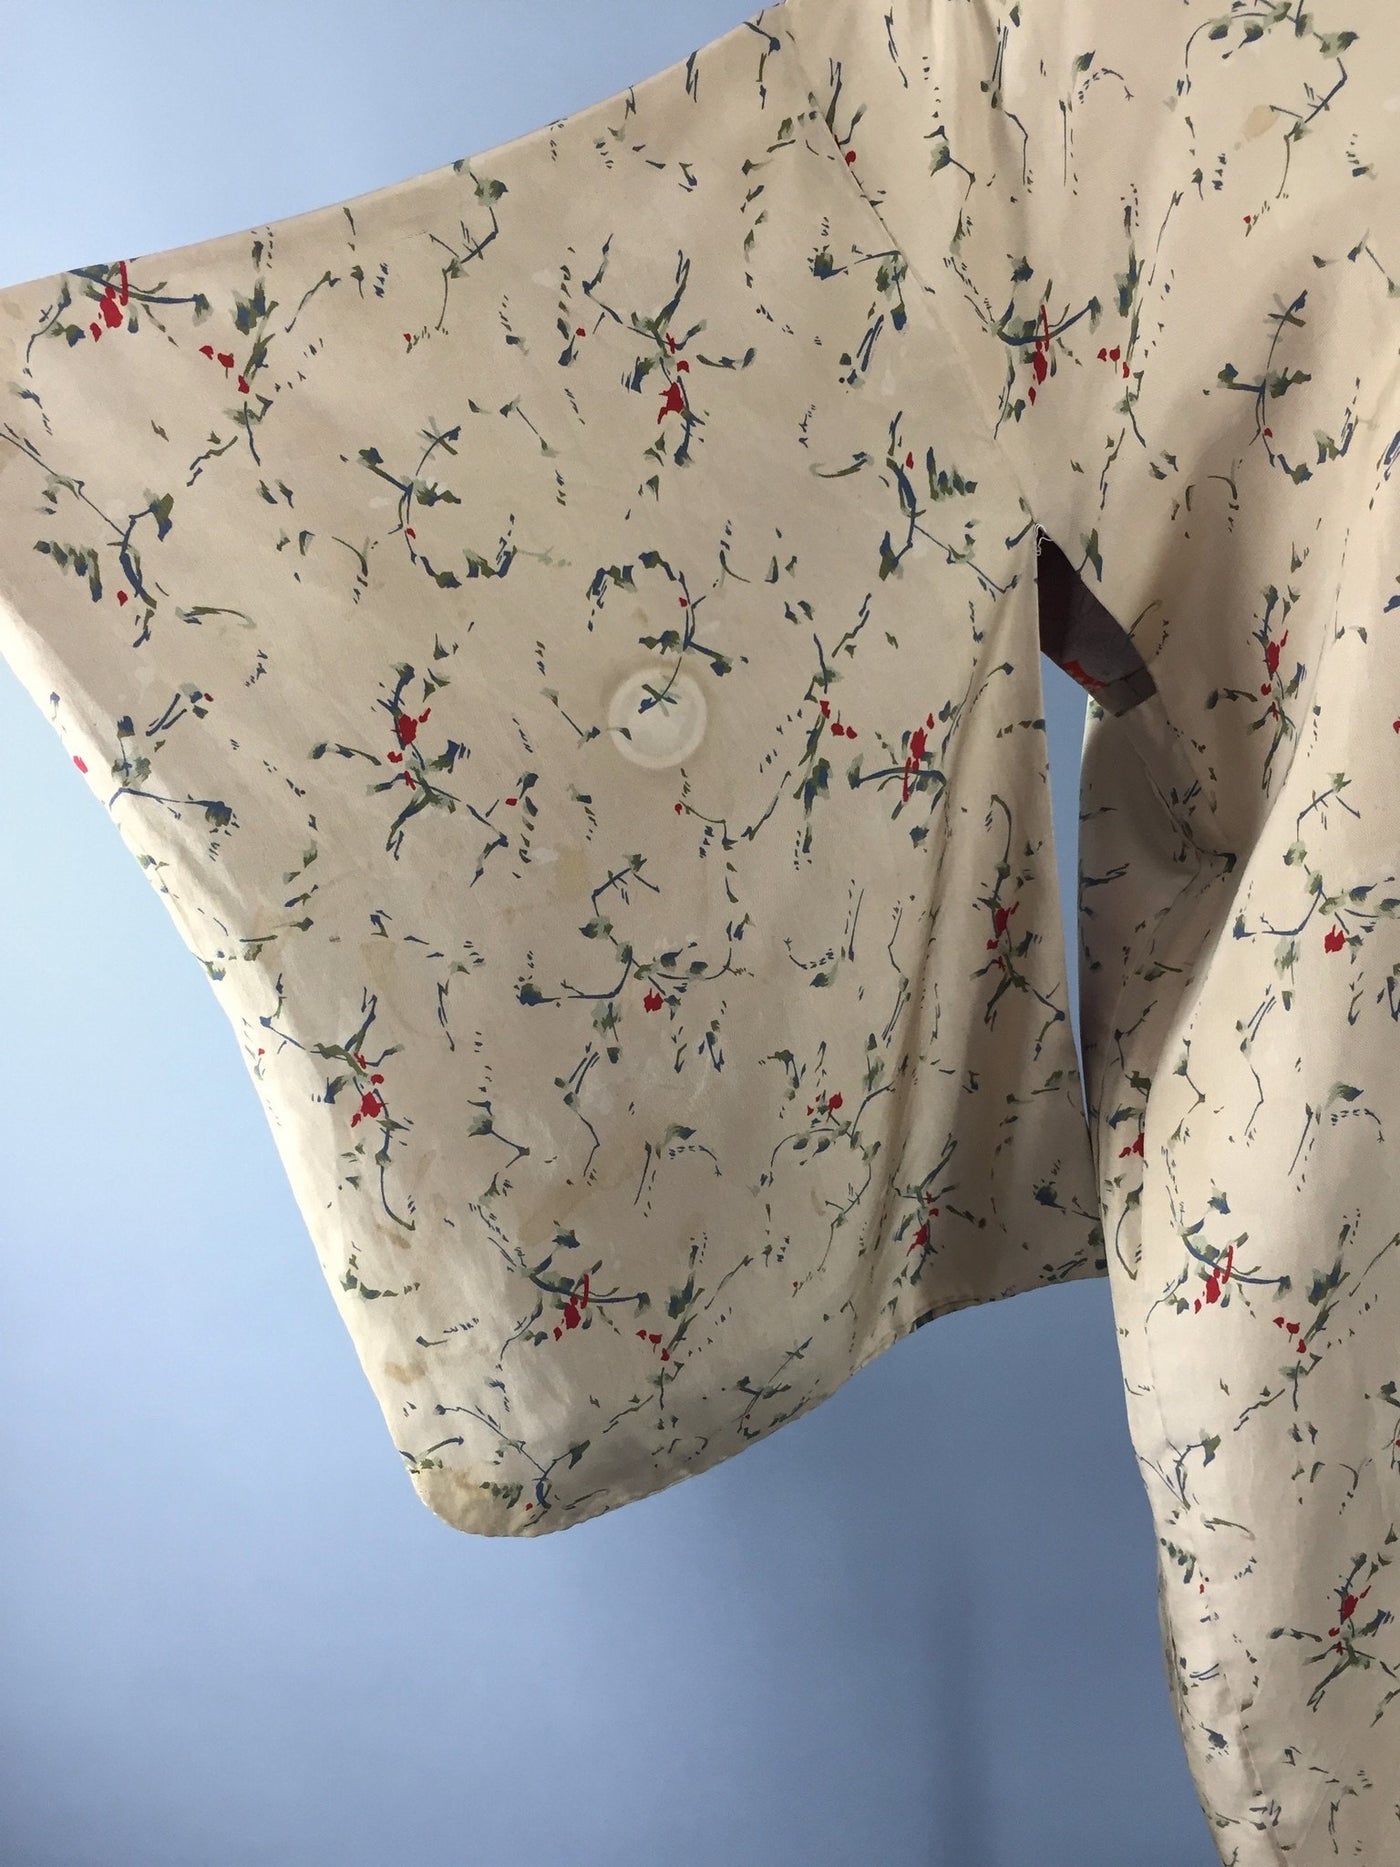 1970s Vintage Silk Kimono Jacket / Silk Haori Kimono Cardigan / Tan Abstract Print - ThisBlueBird